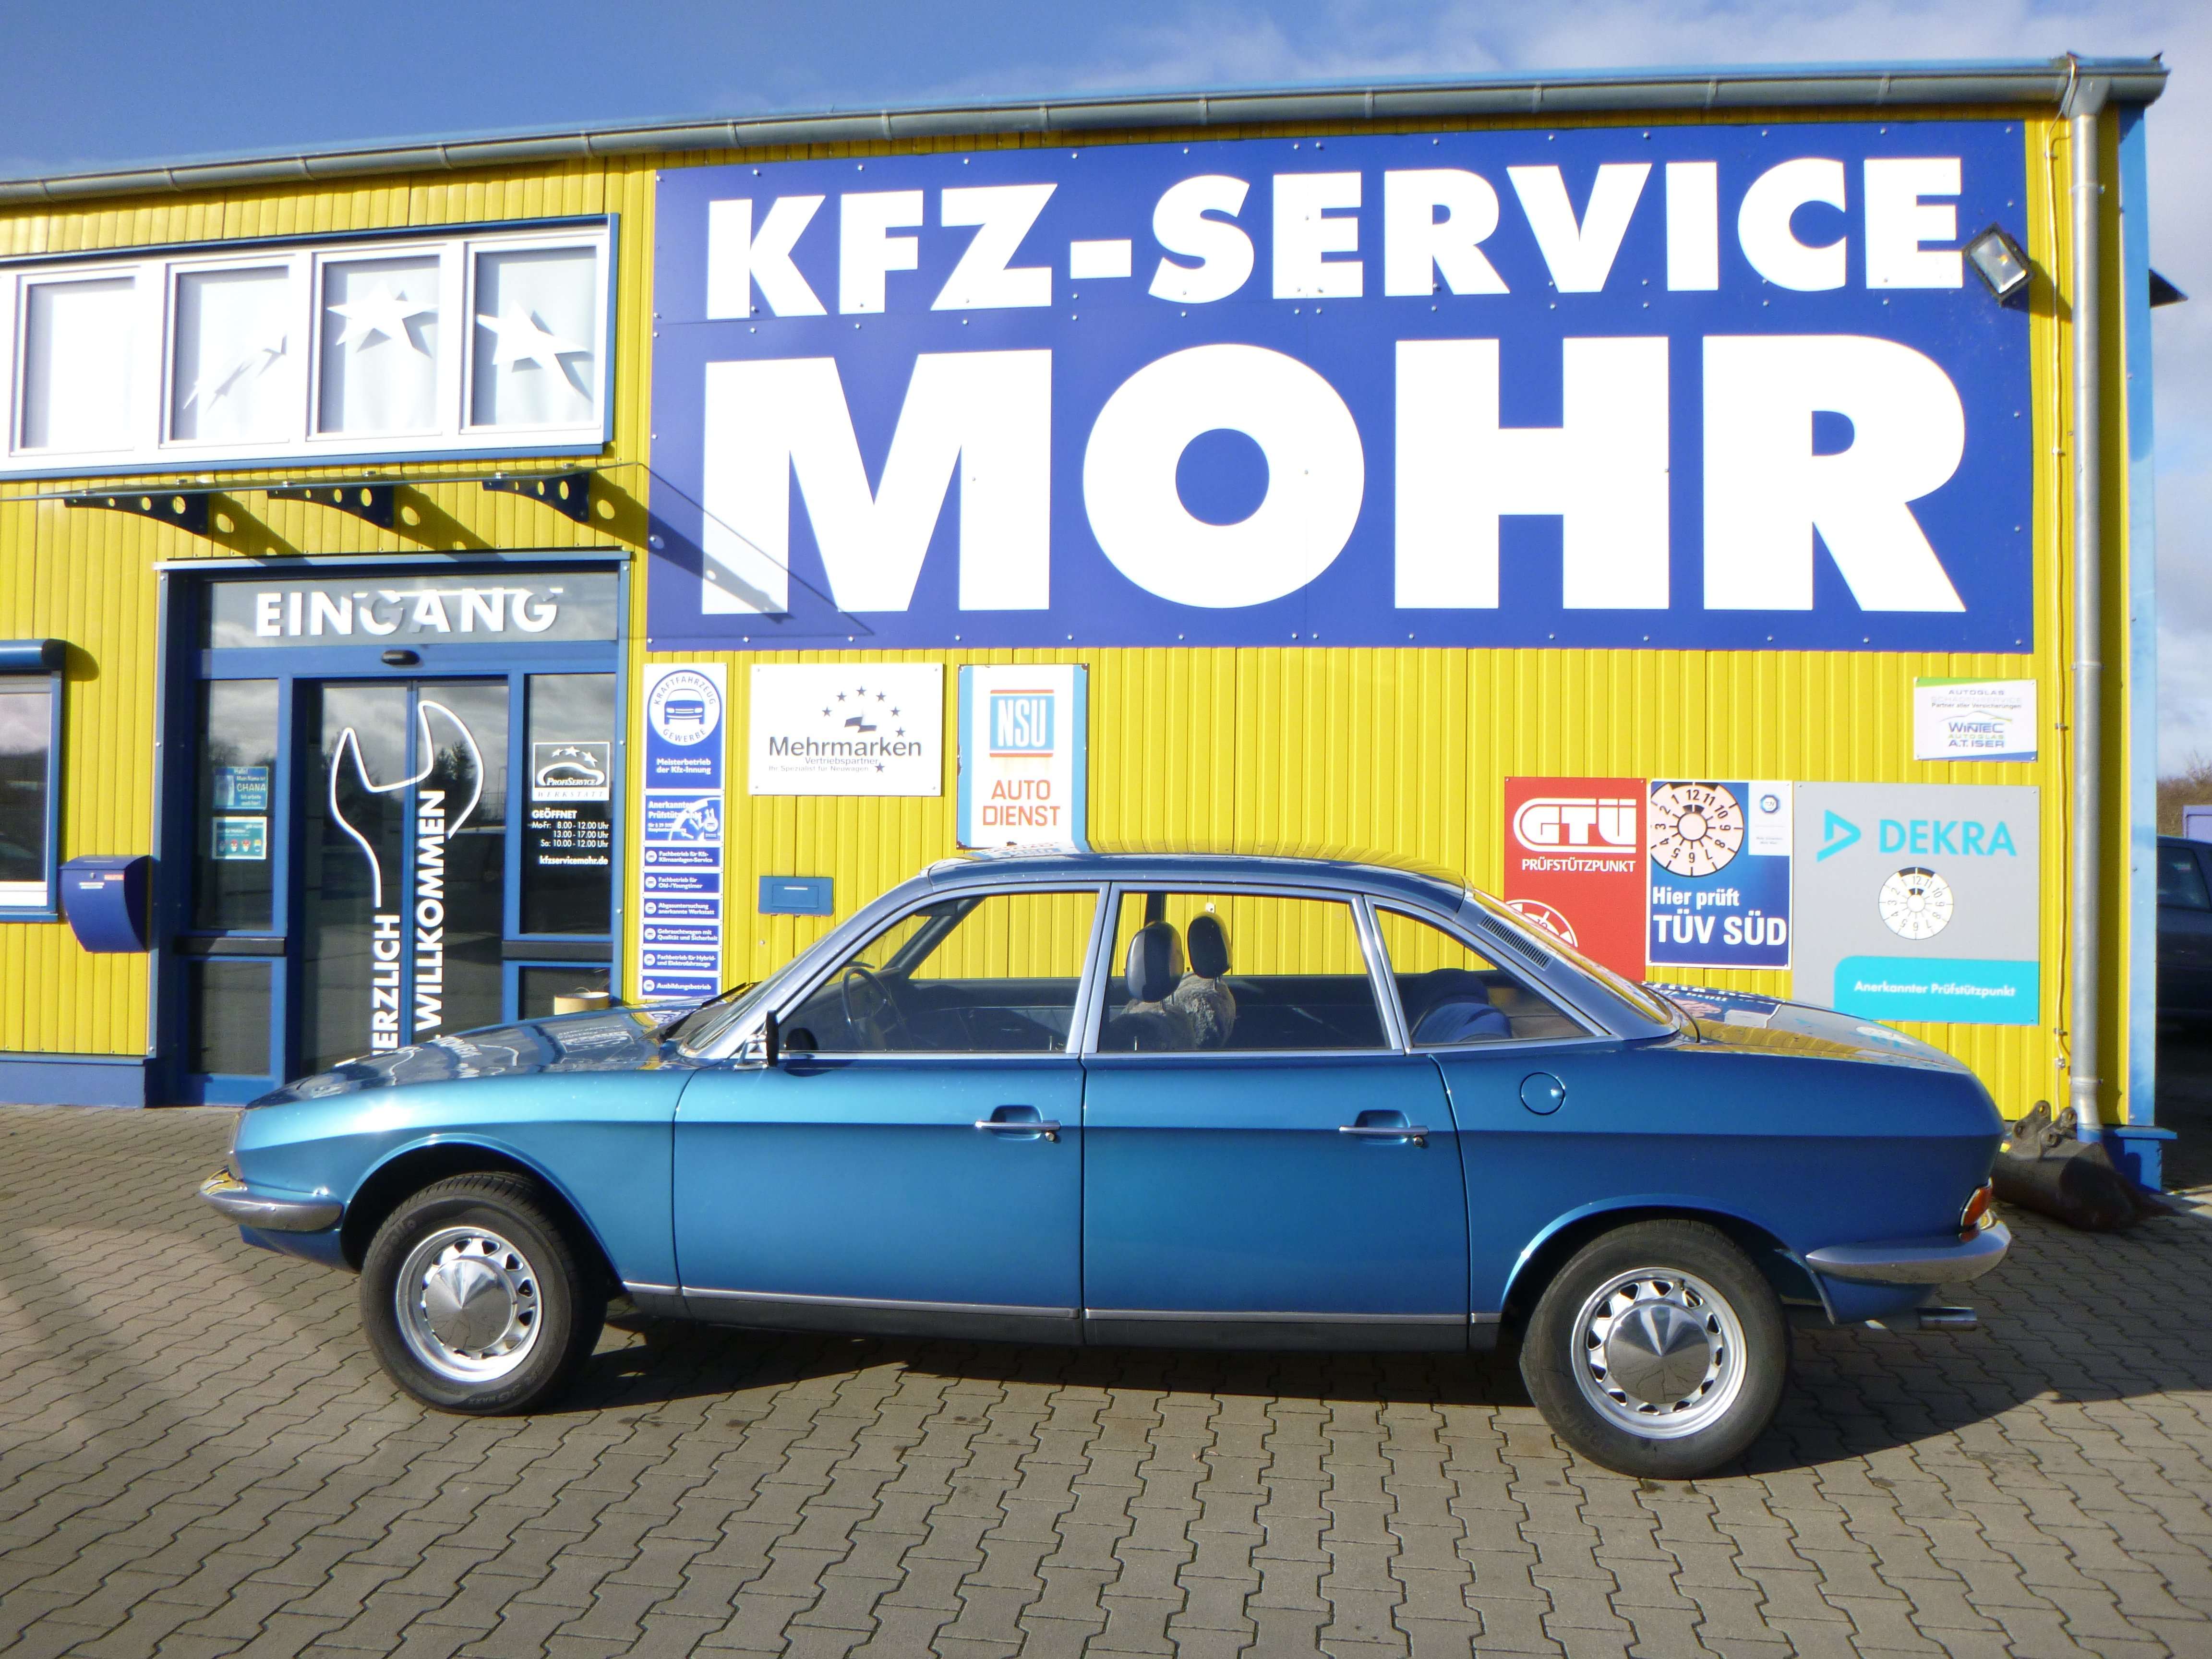 NSU RO80 Sedan in Blue used in Oerlenbach for € 15,000.-